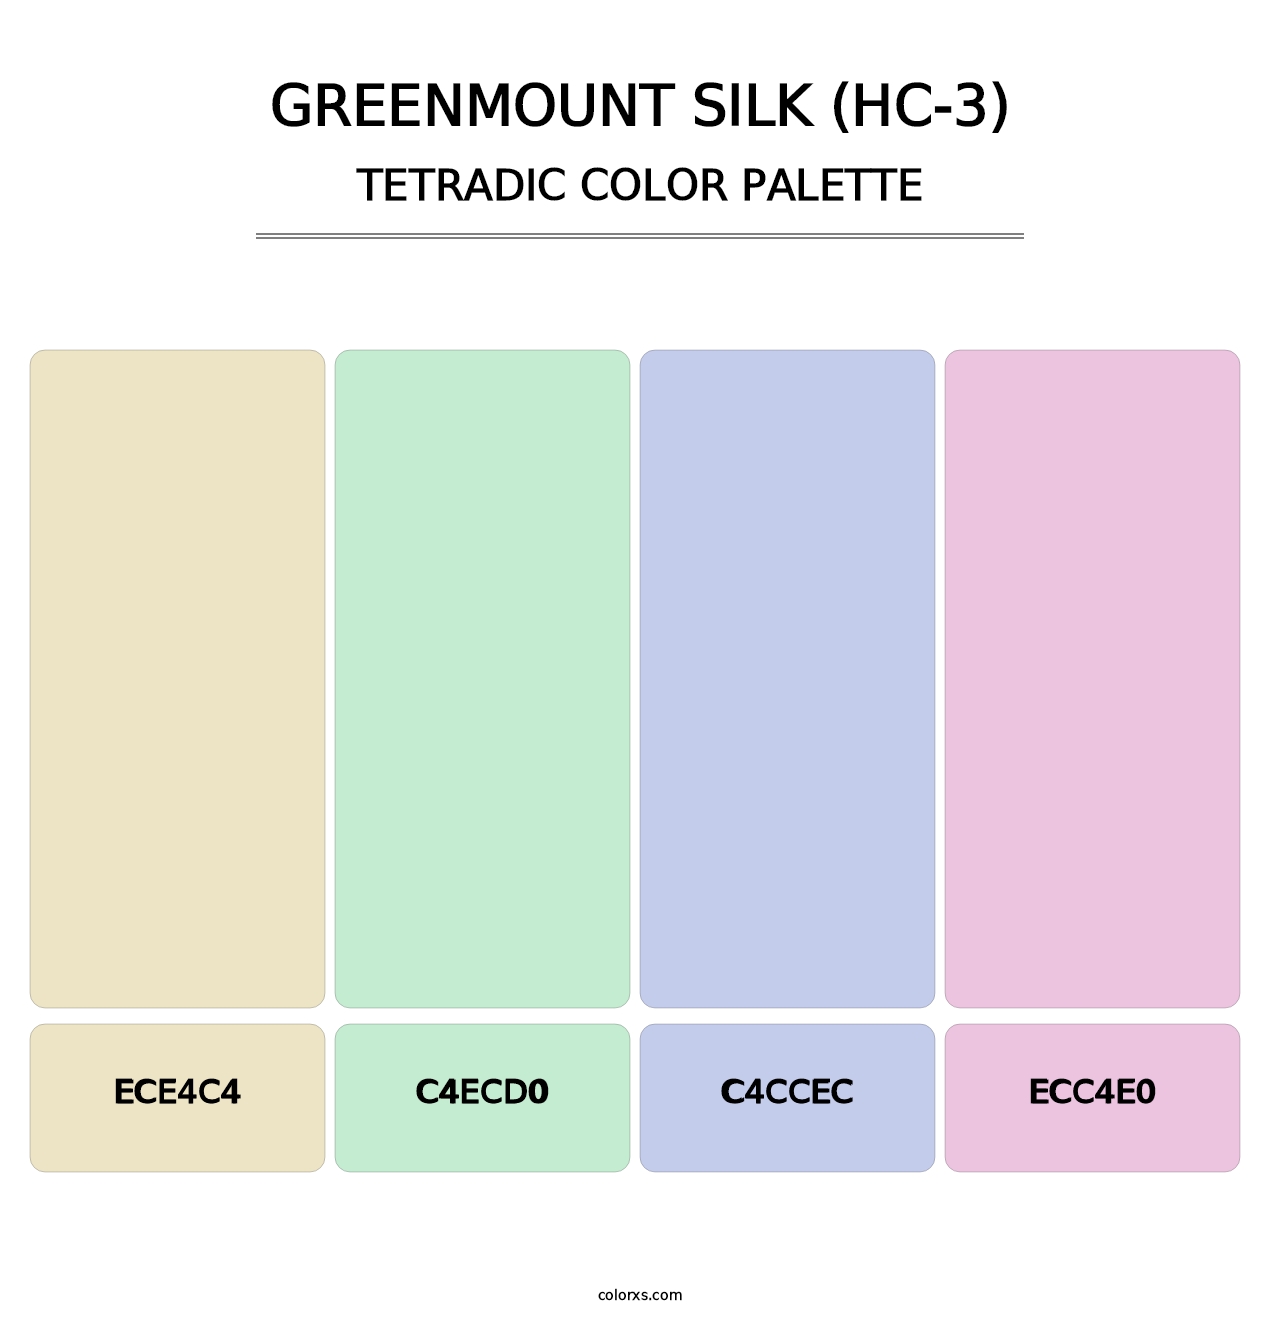 Greenmount Silk (HC-3) - Tetradic Color Palette